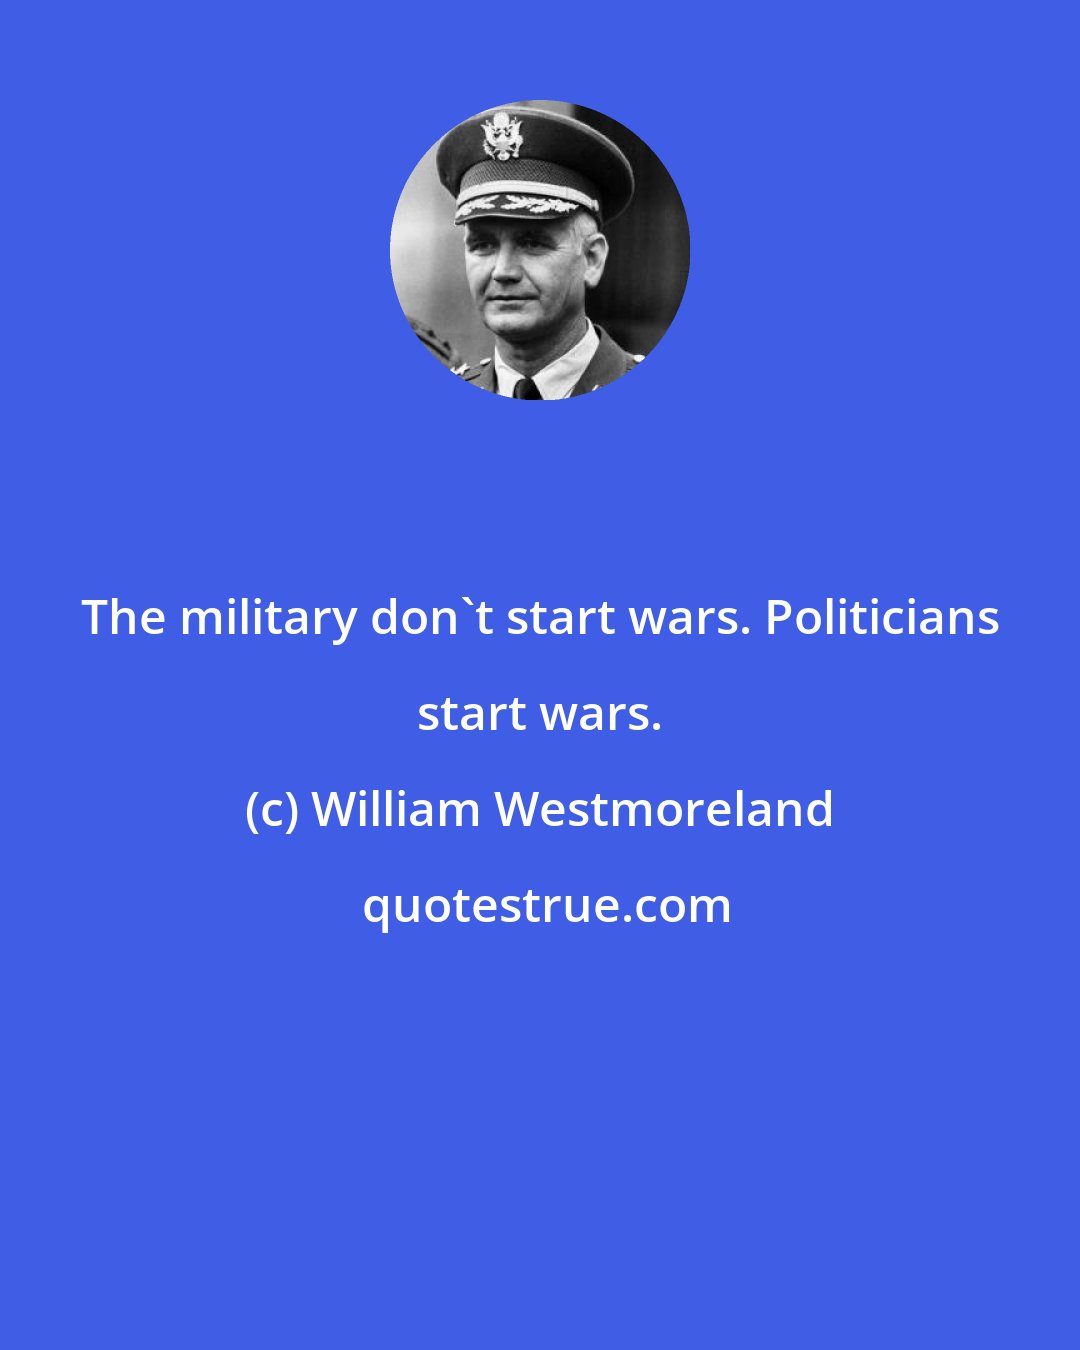 William Westmoreland: The military don't start wars. Politicians start wars.